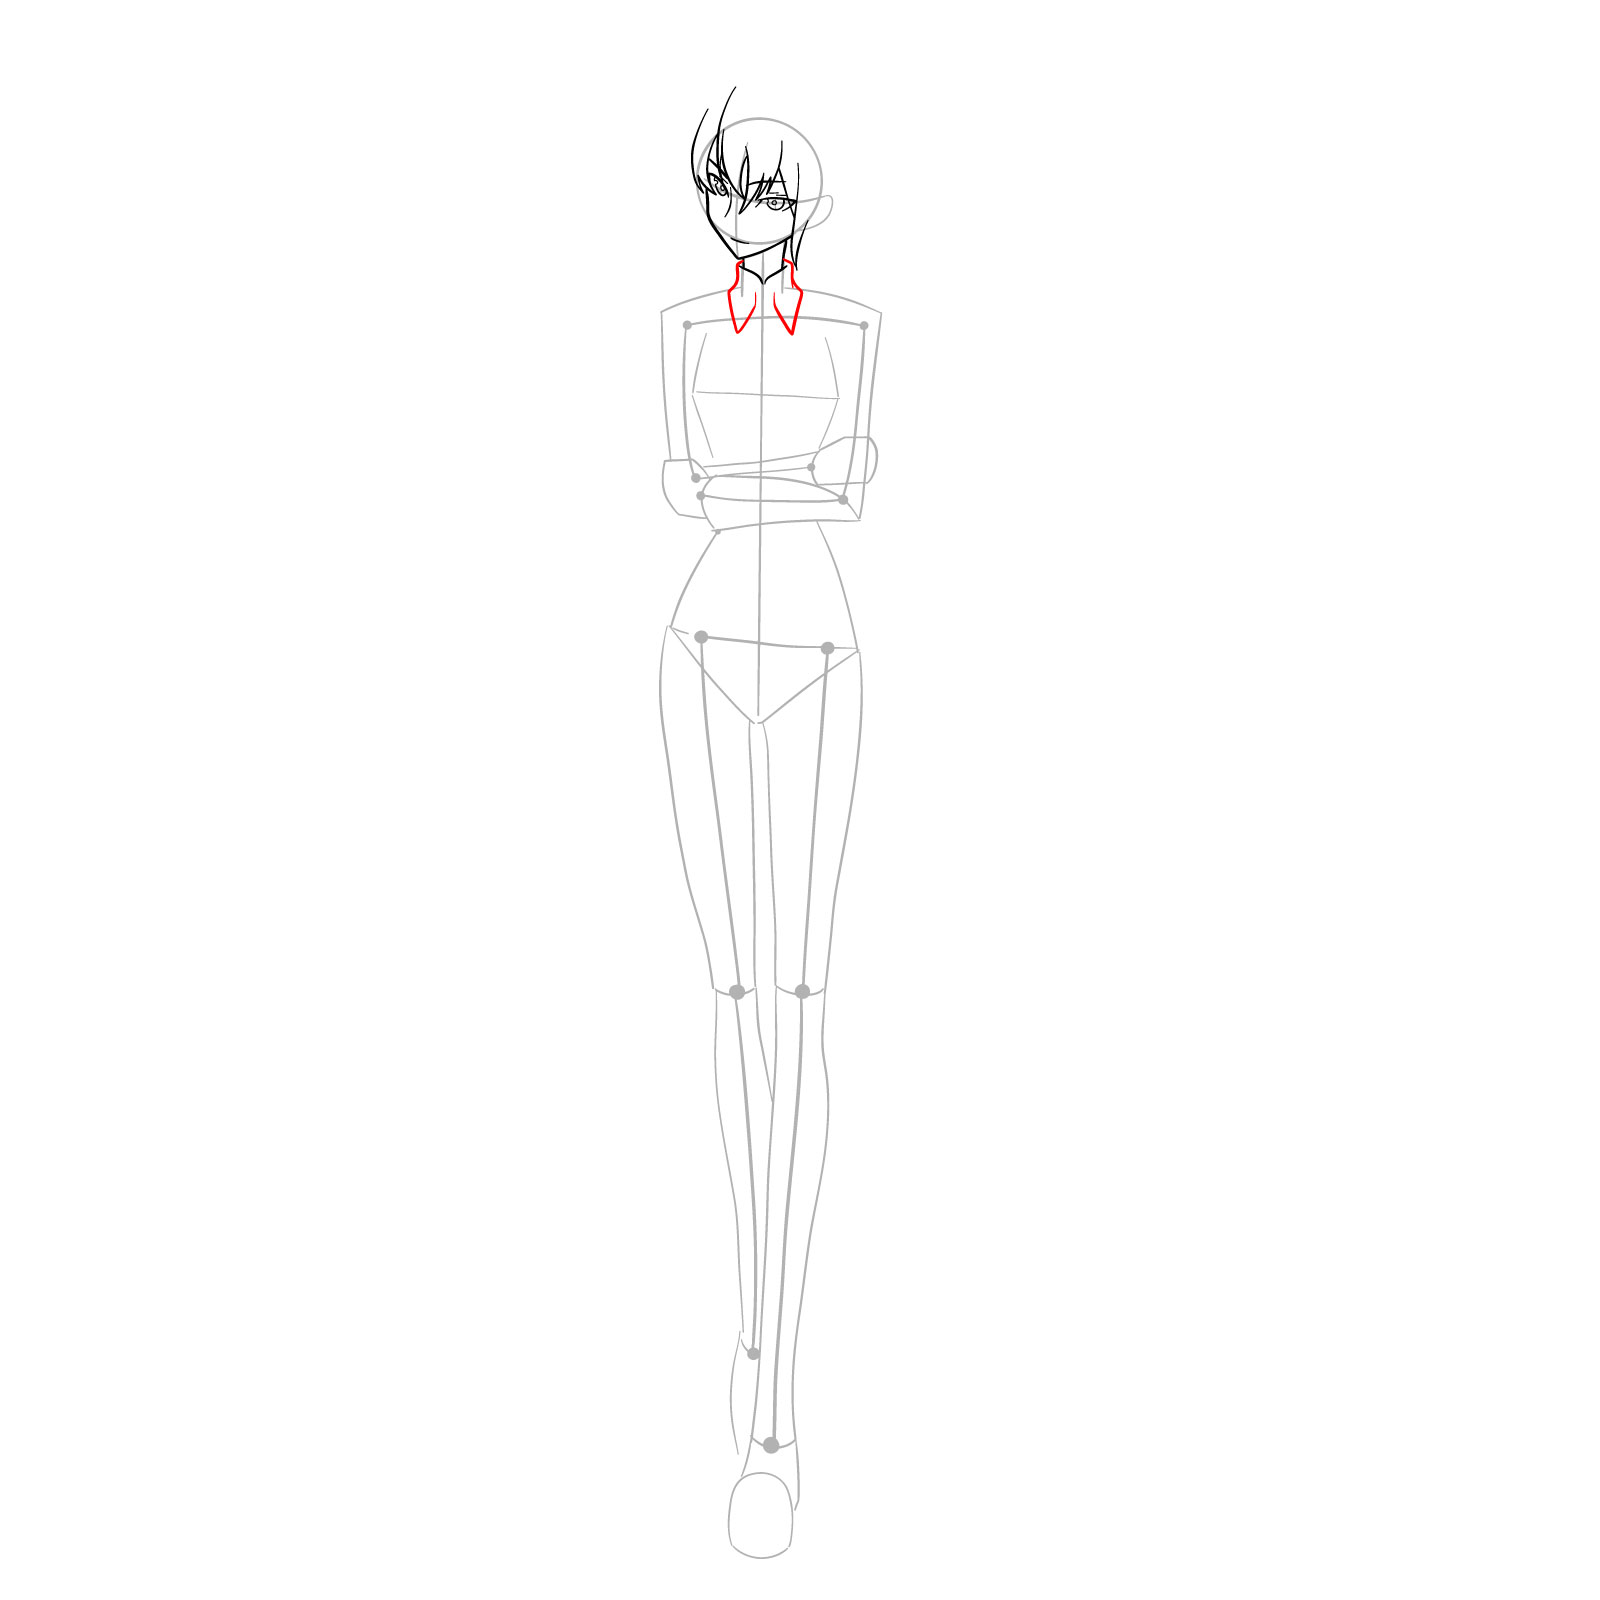 How to draw Kurisu Makise from Steins;Gate - step 11